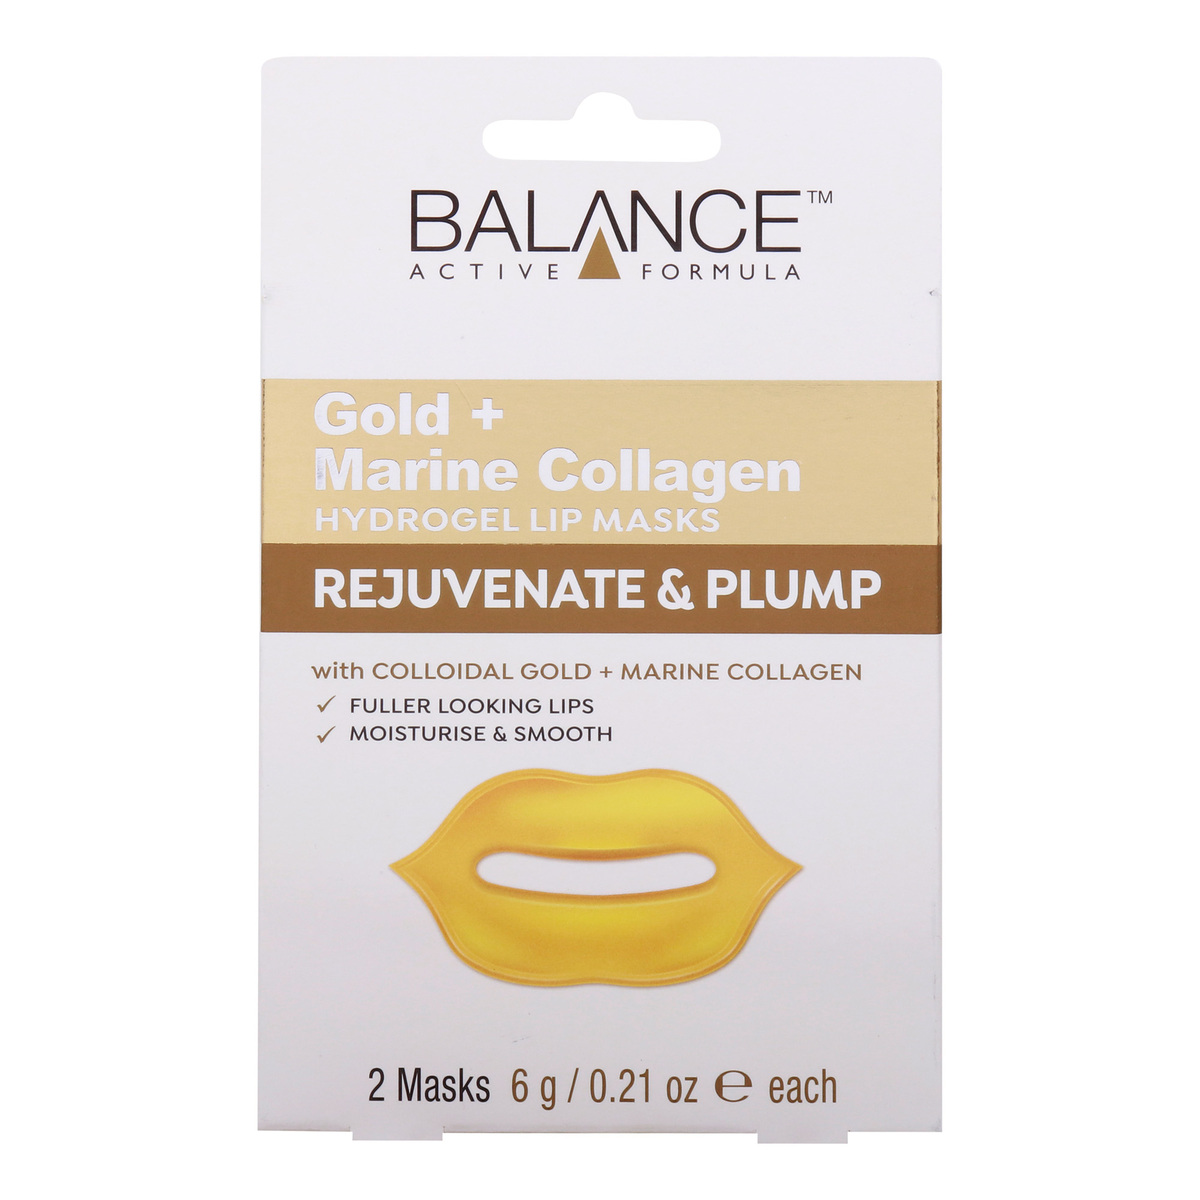 Balance Active Formula Gold + Marine Collagen Hydrogel Lip Masks 2 pcs